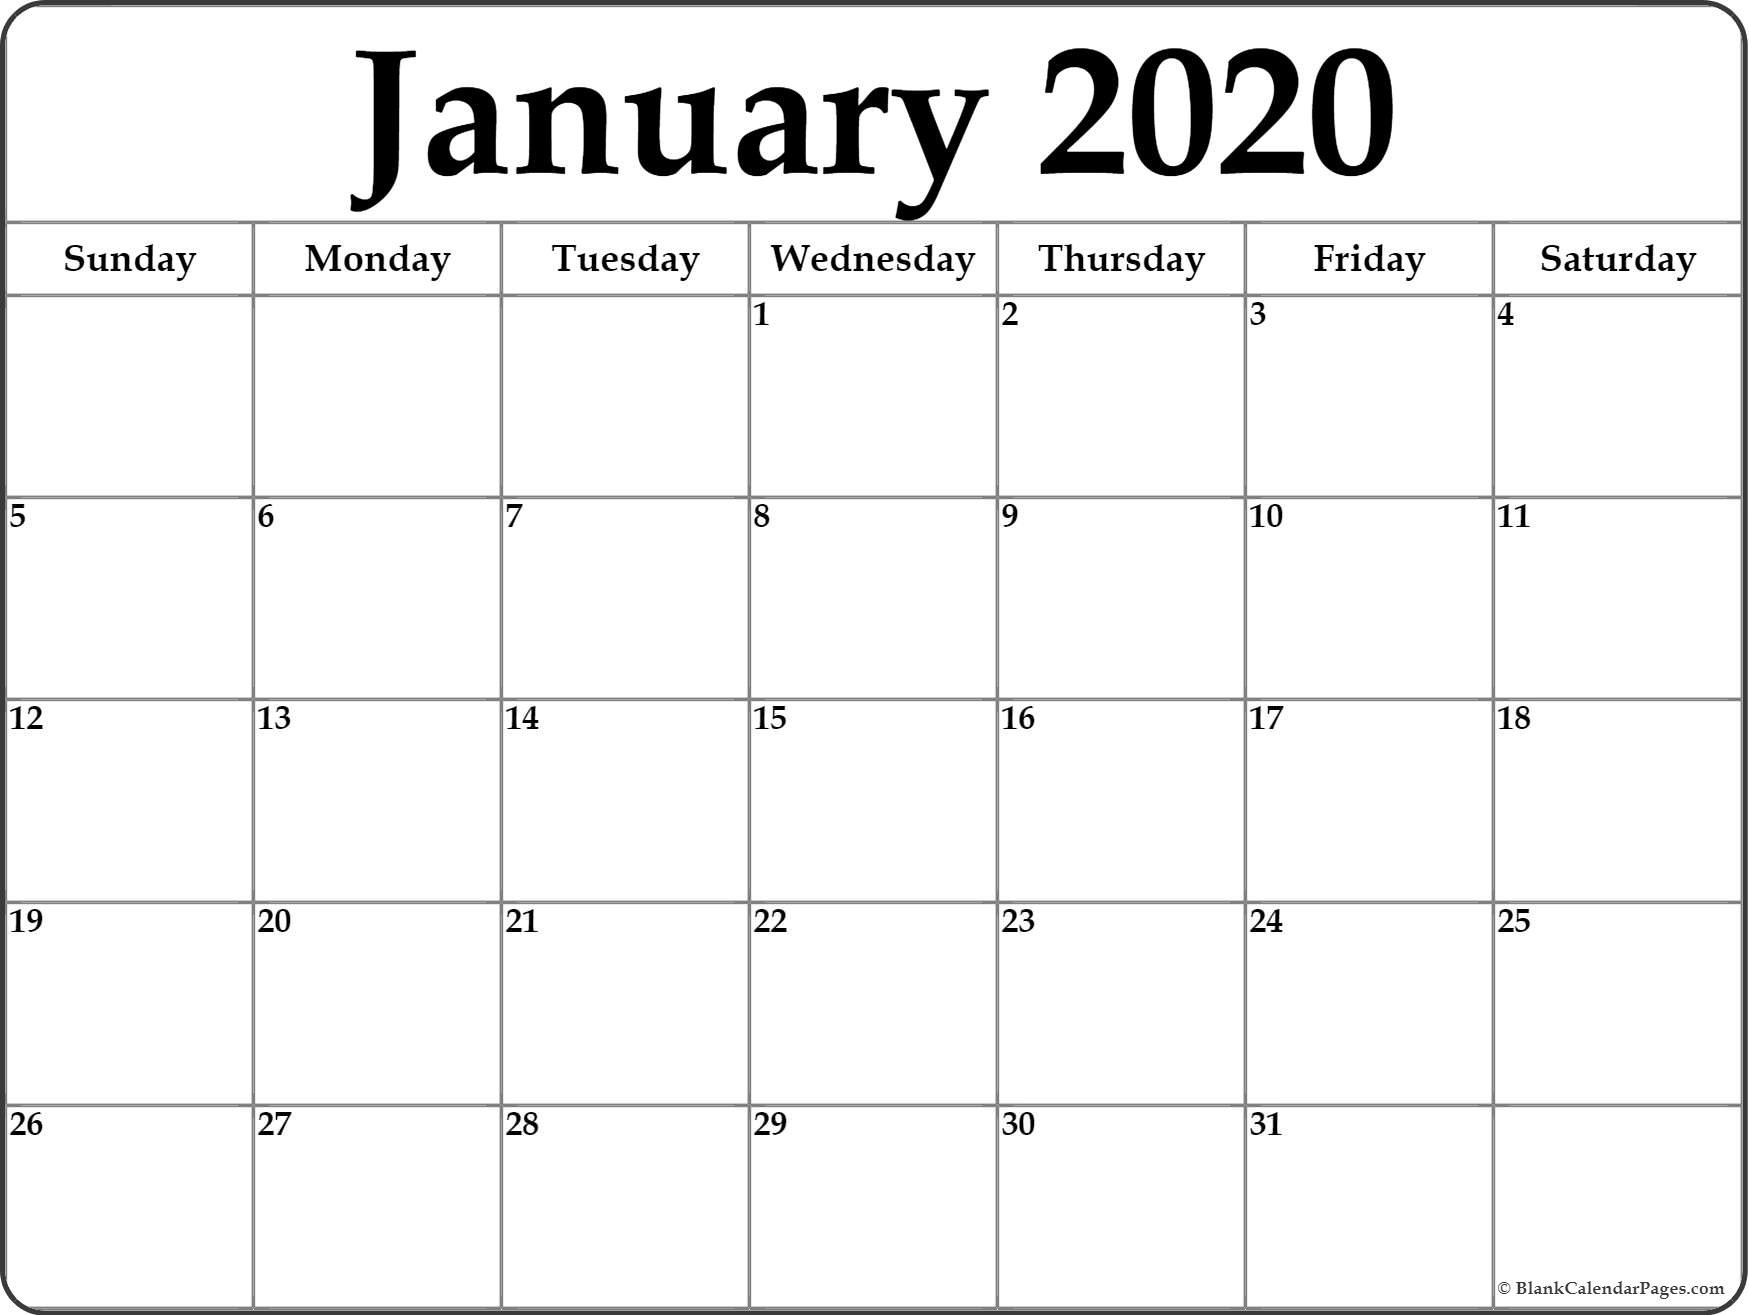 January 2020 Calendar | Free Printable Monthly Calendars-2020 January February Calendar